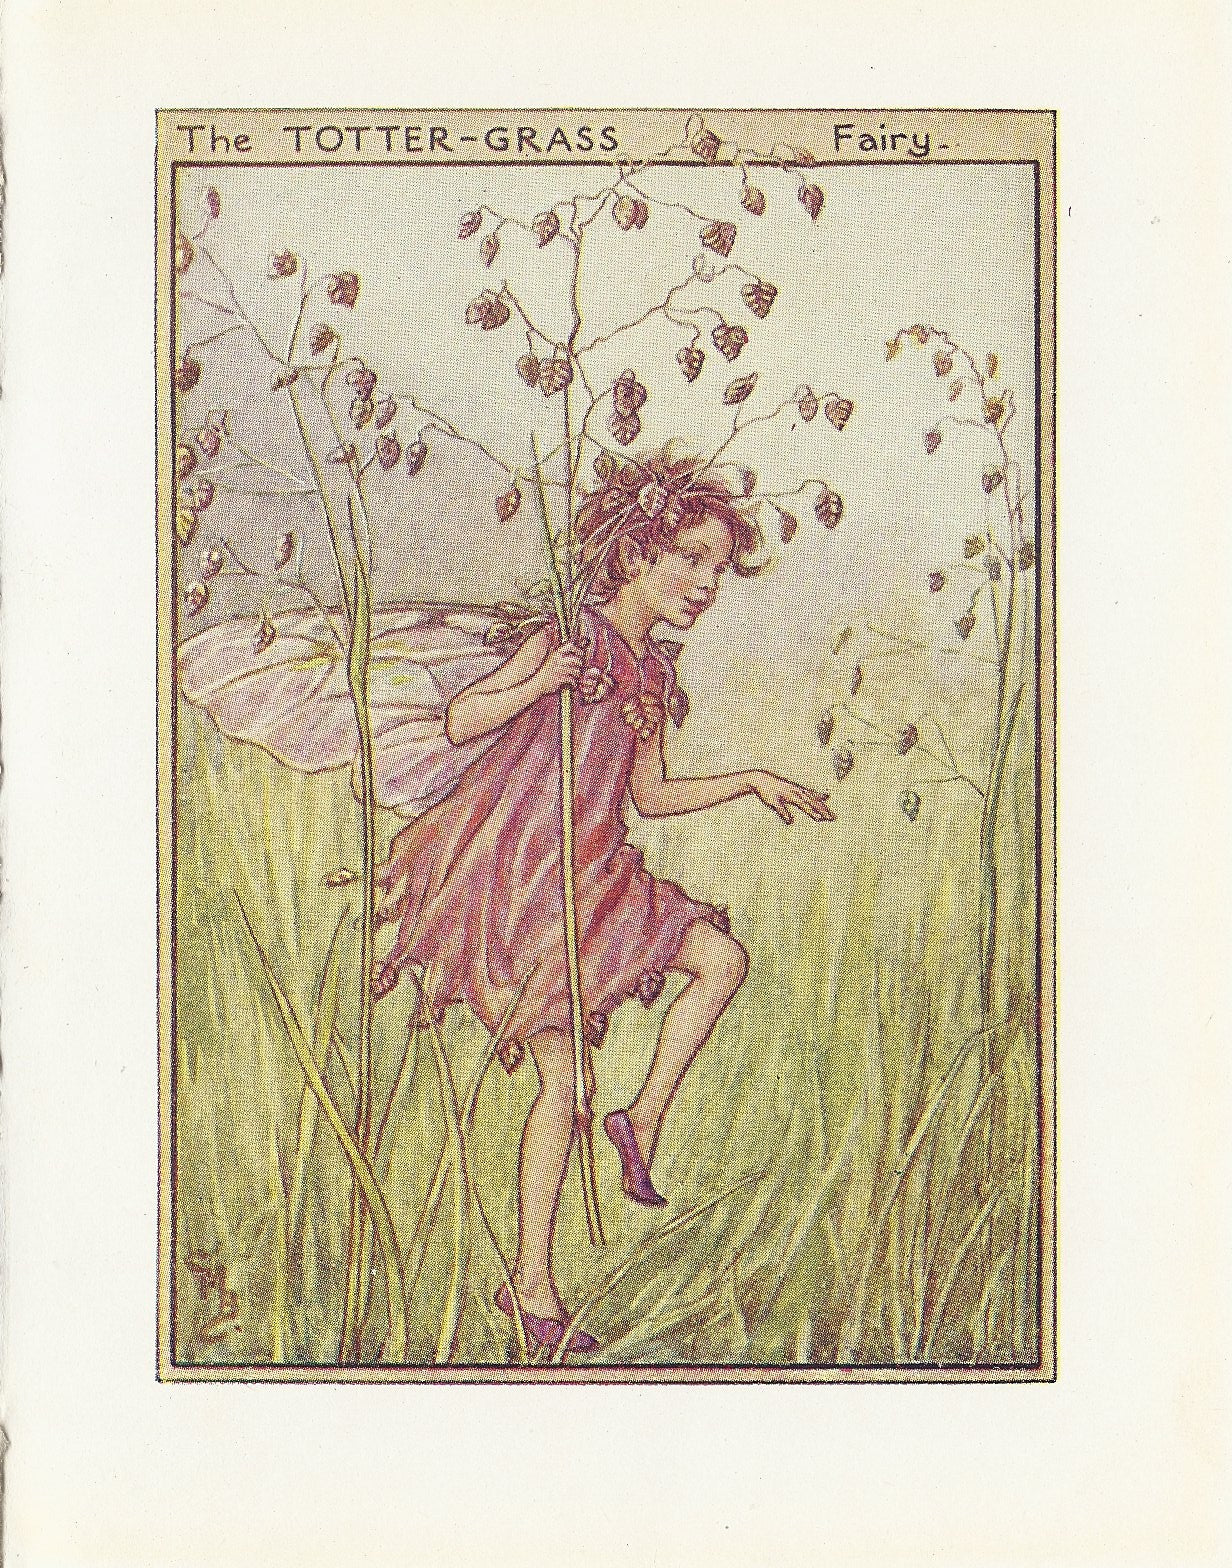 Totter-grass Flower Fairy guaranteed original vintage print